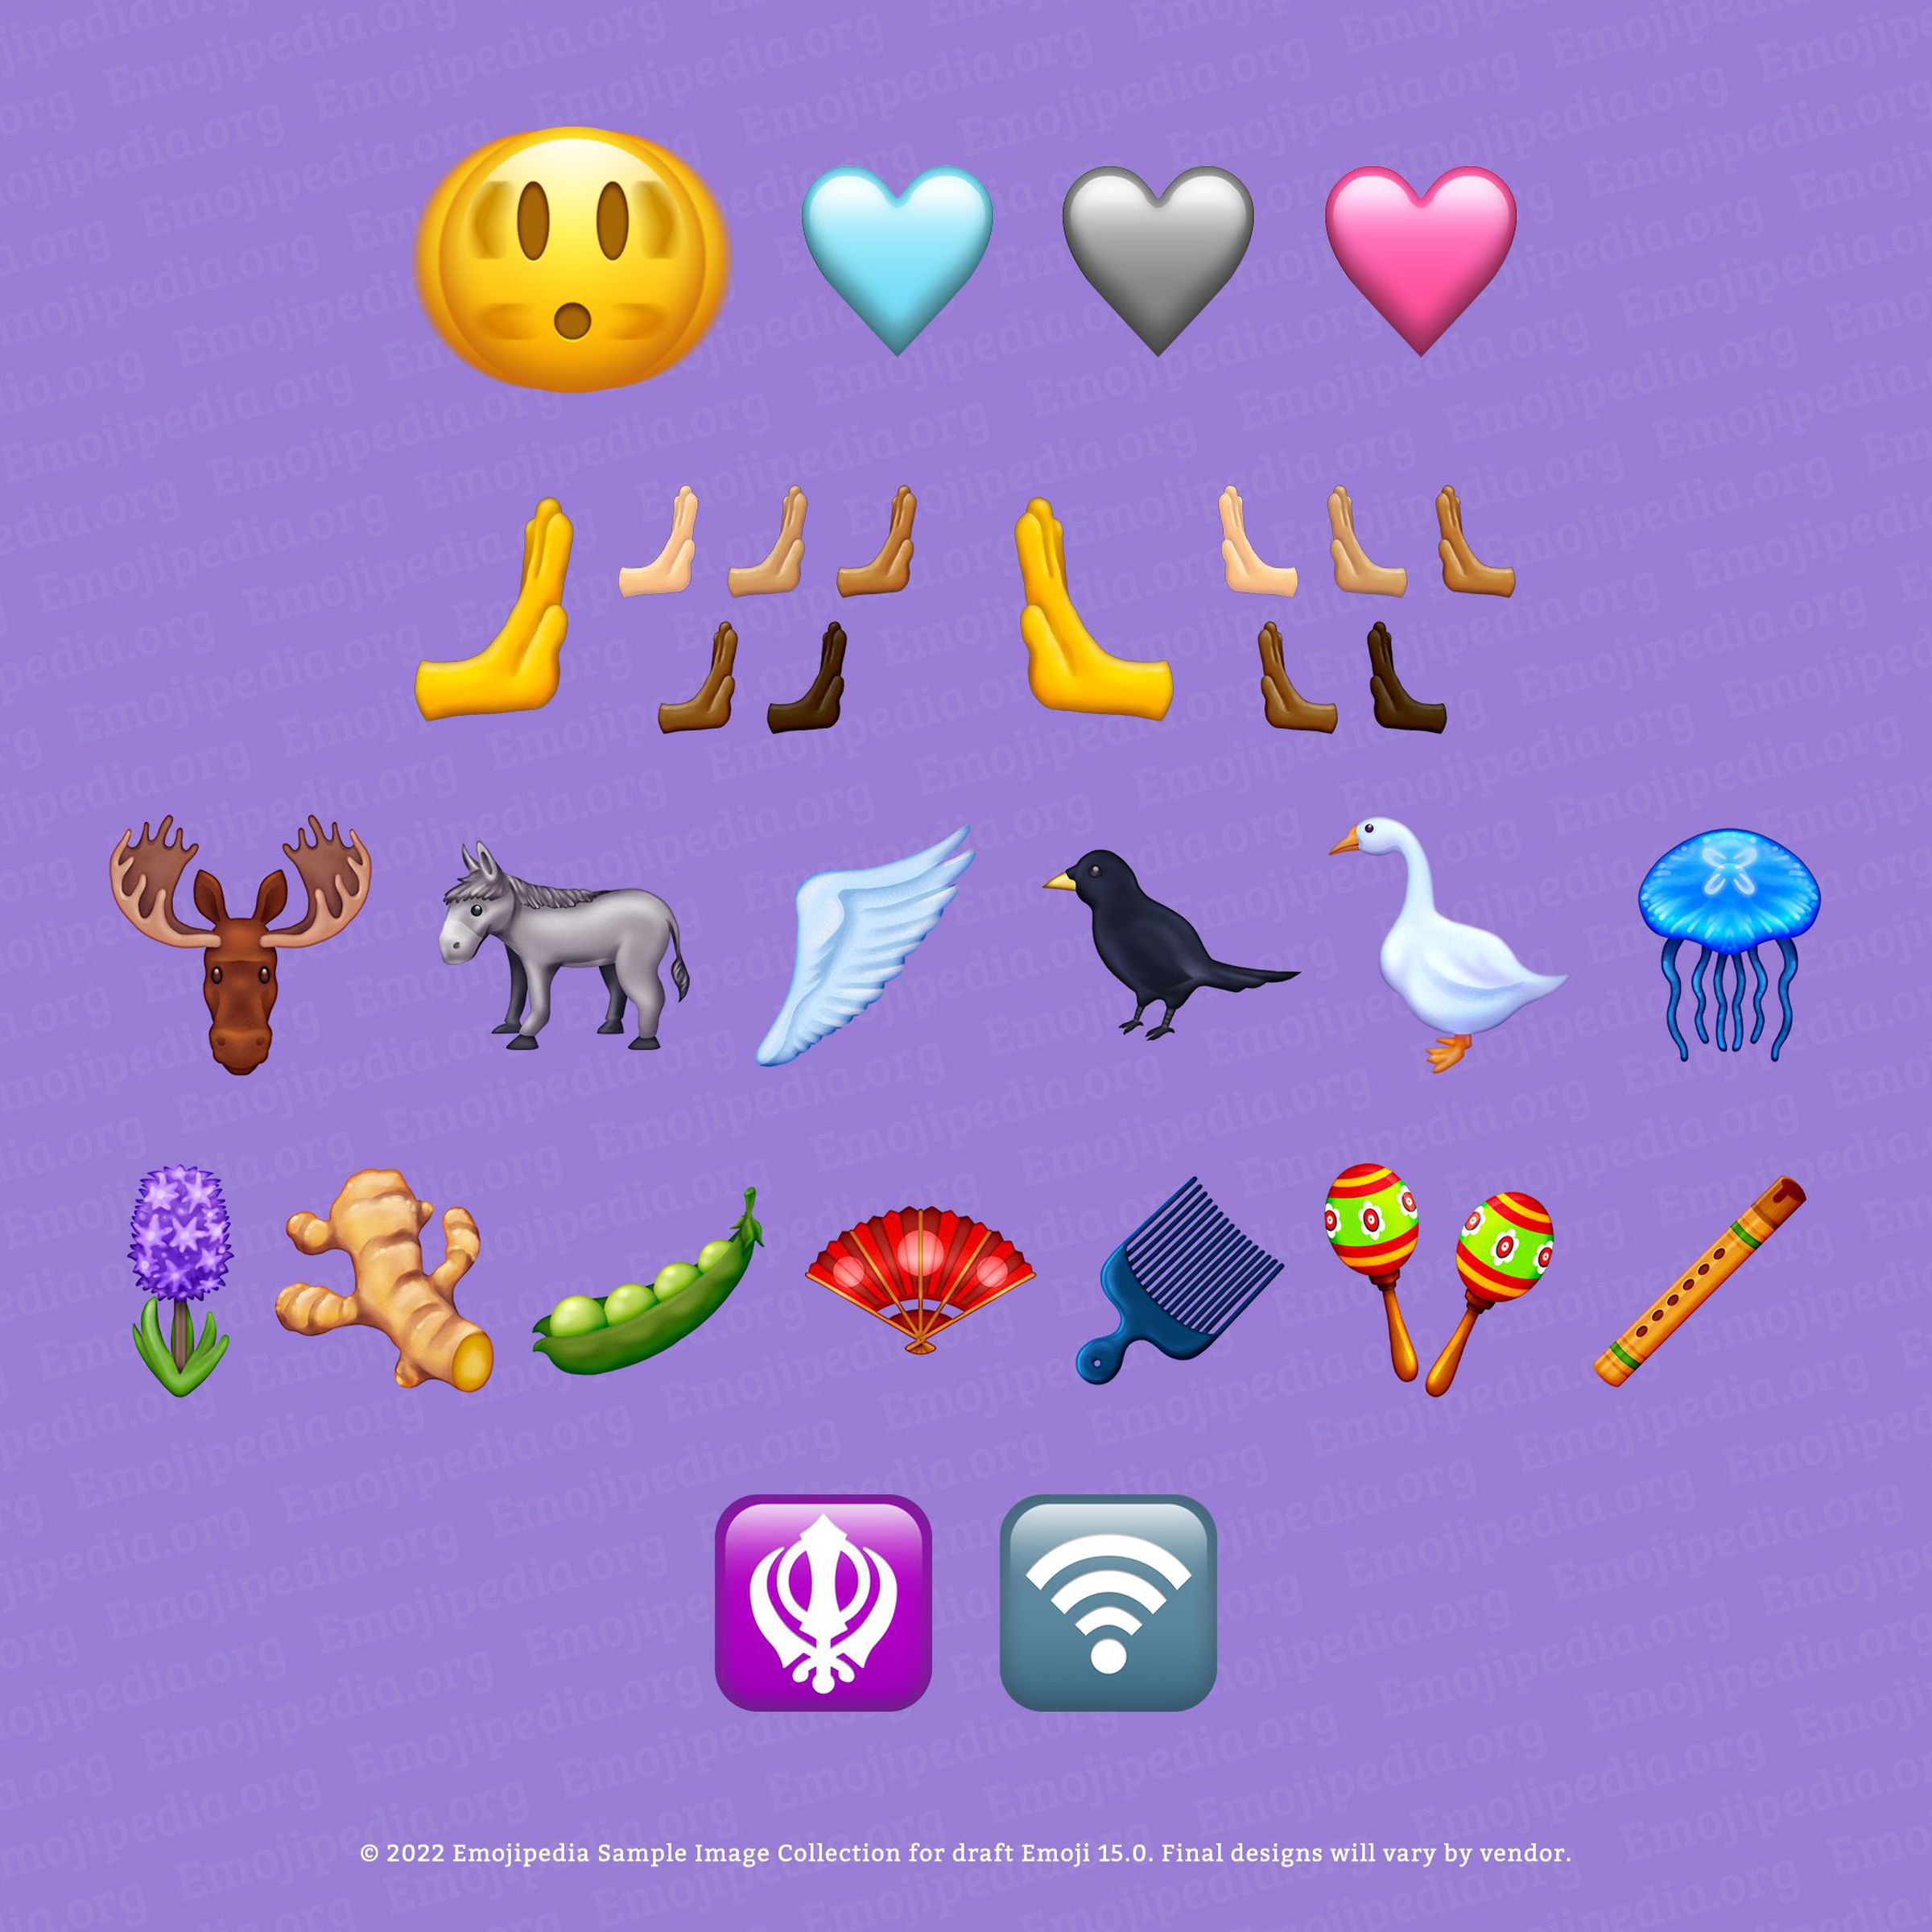 New emoji in Unicode 15.0.